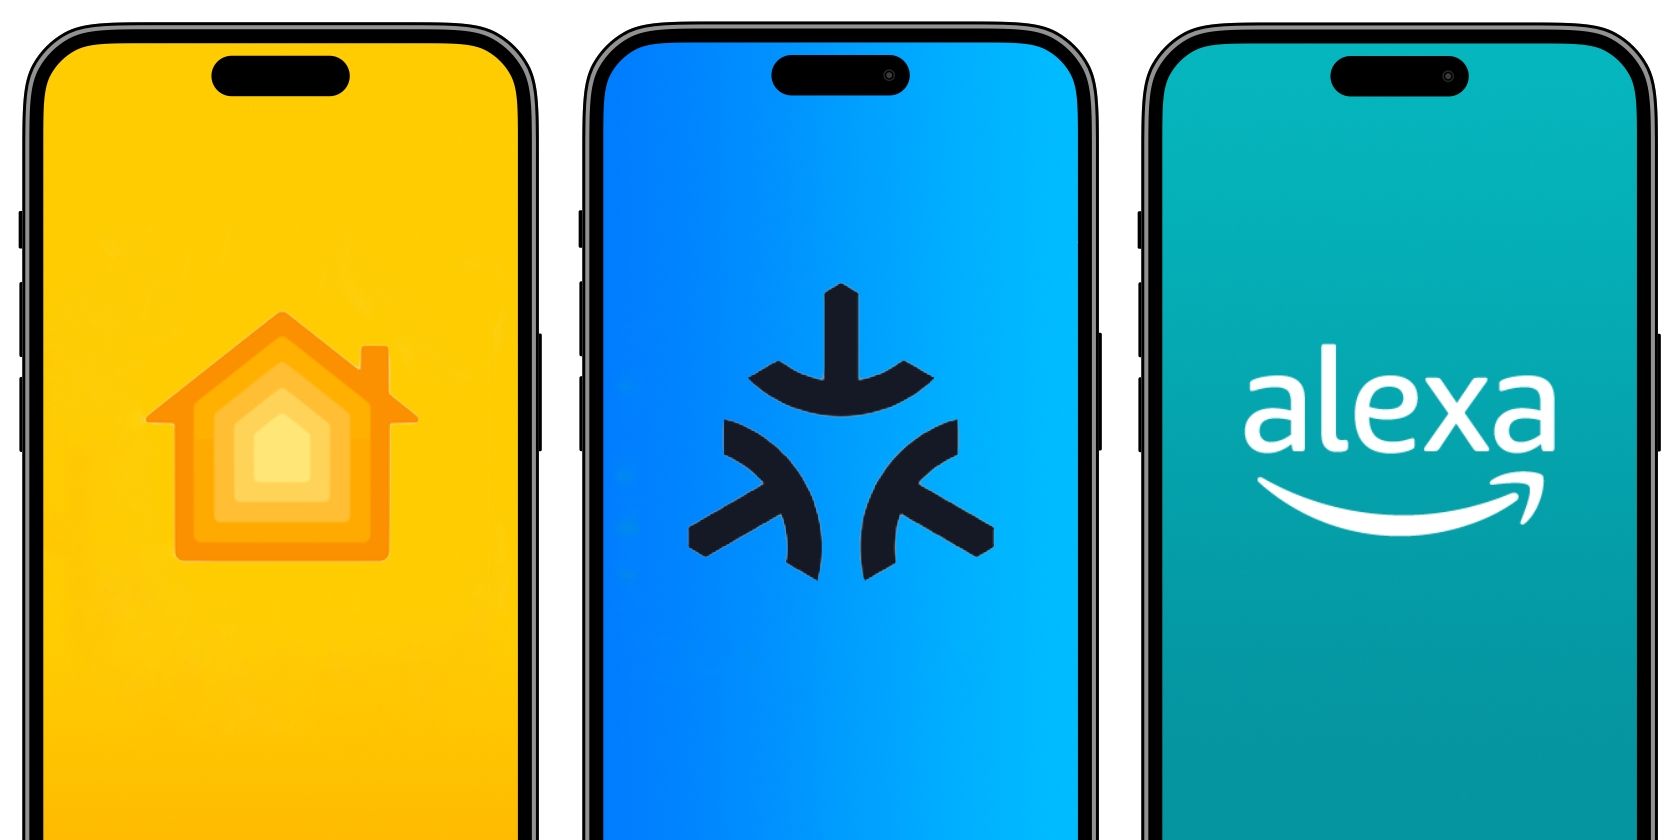 Home App, Matter, and Alexa logos displayed on three iPhones